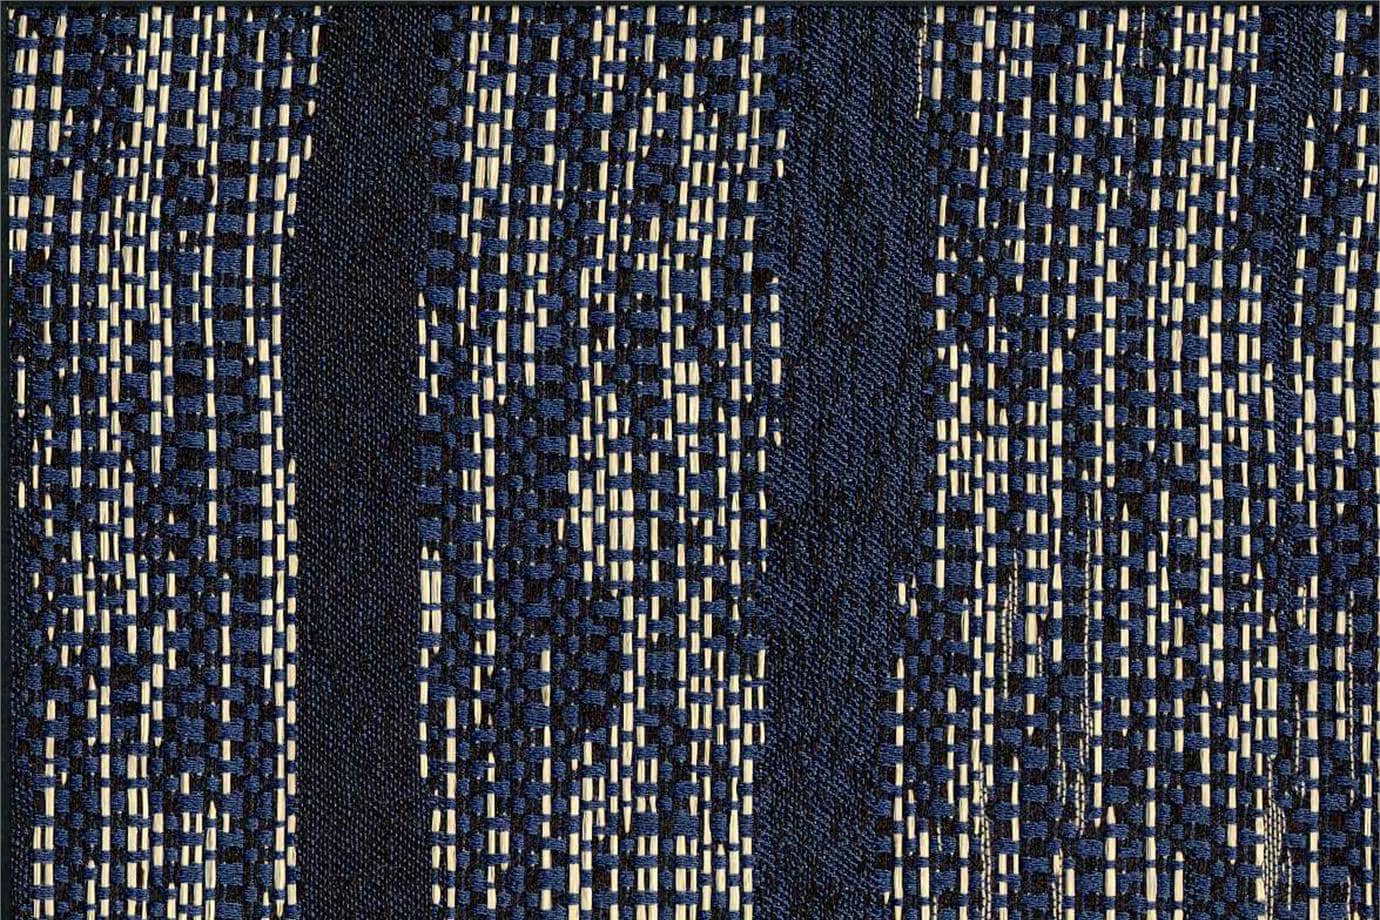 J3157 CAVALIERE 008 Blu home decoration fabric